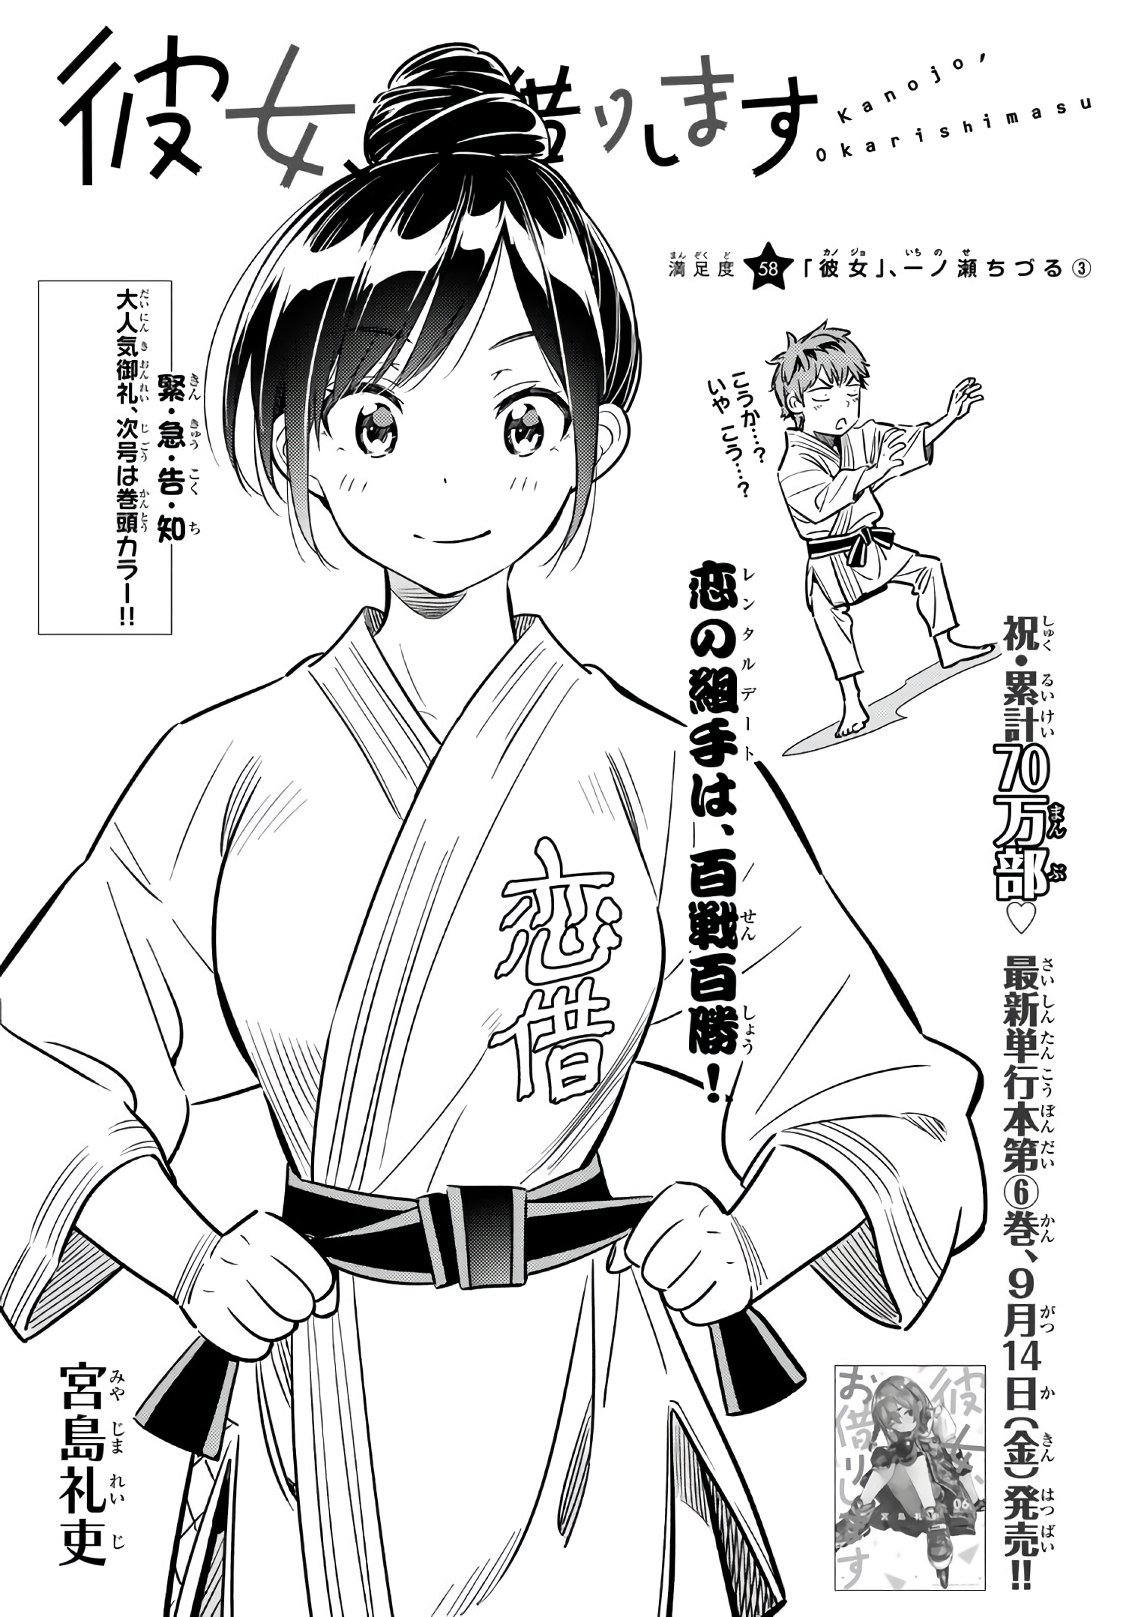 Read Kanojo, Okarishimasu 284 - Oni Scan